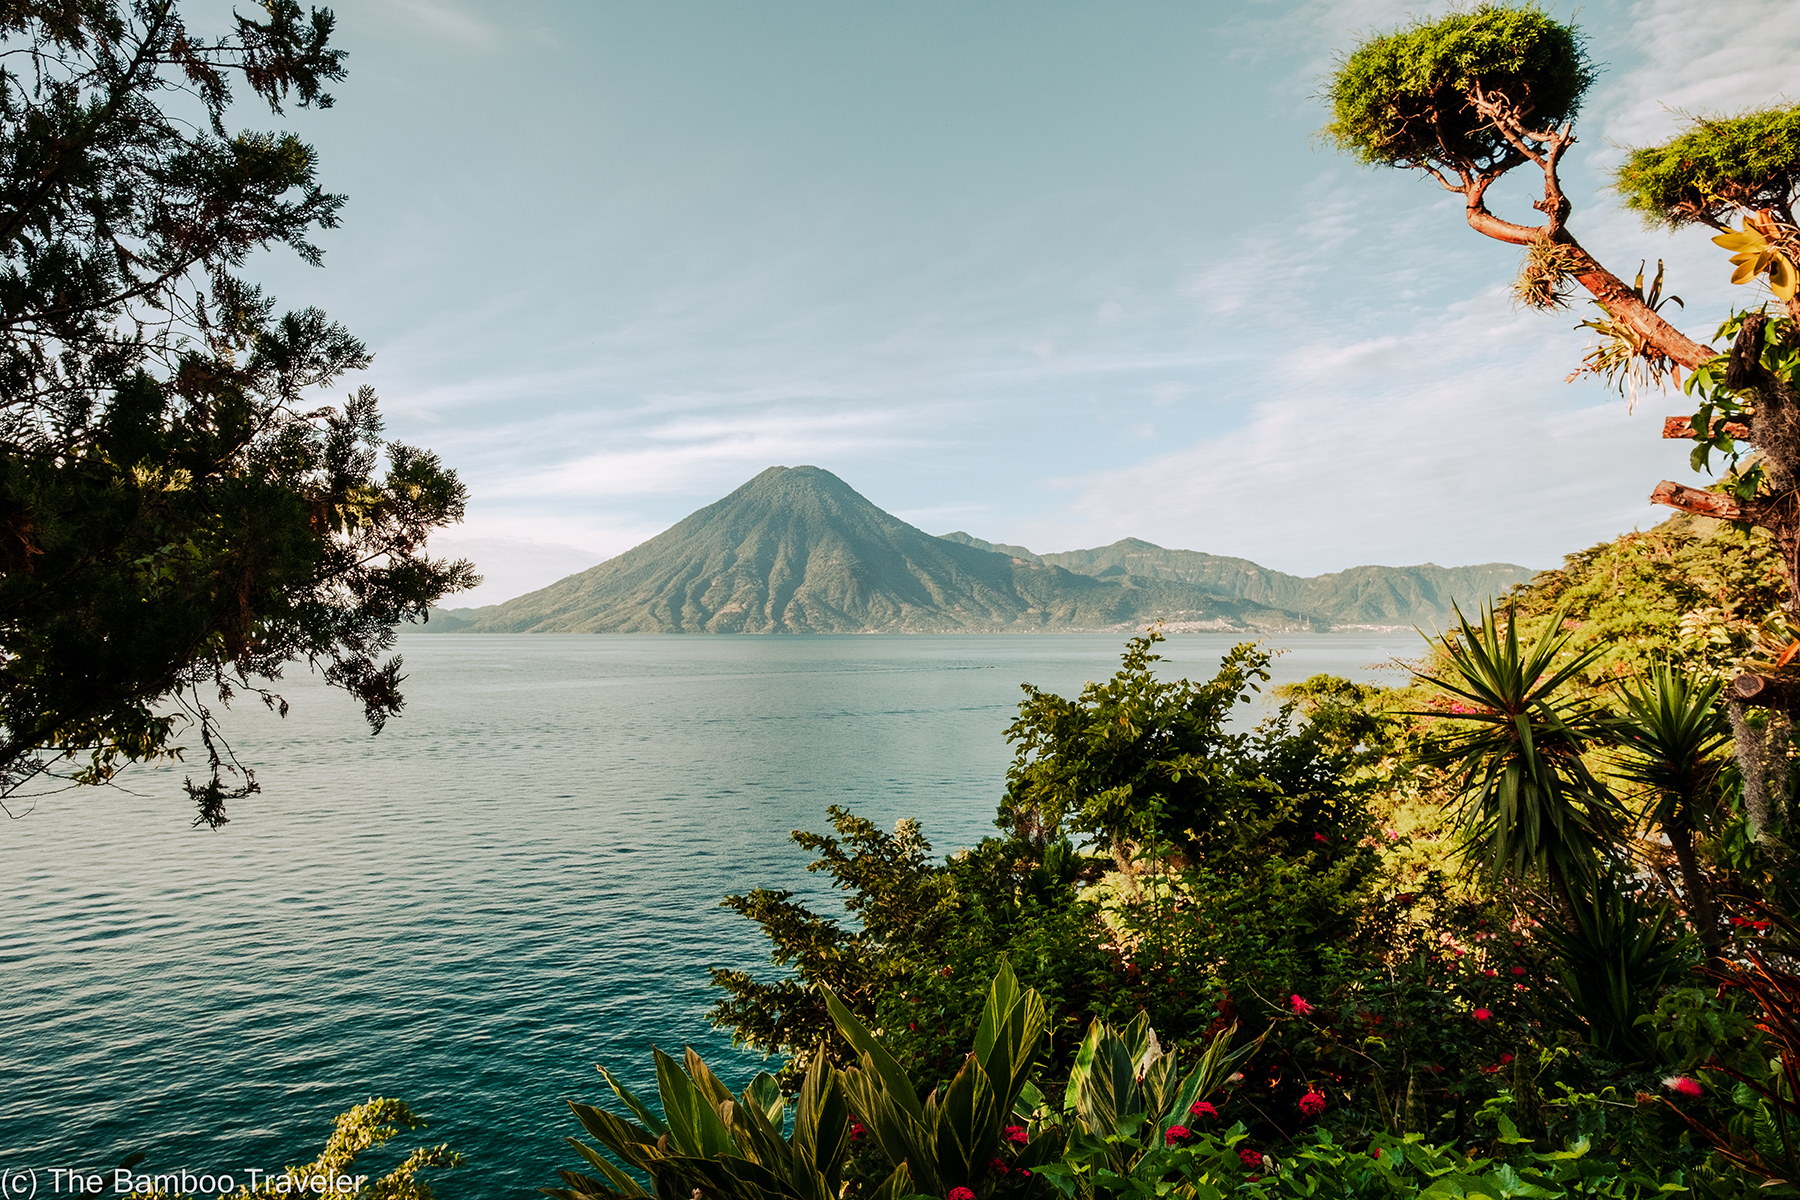 a view of San Pedro volcano from across Lake Atitlan